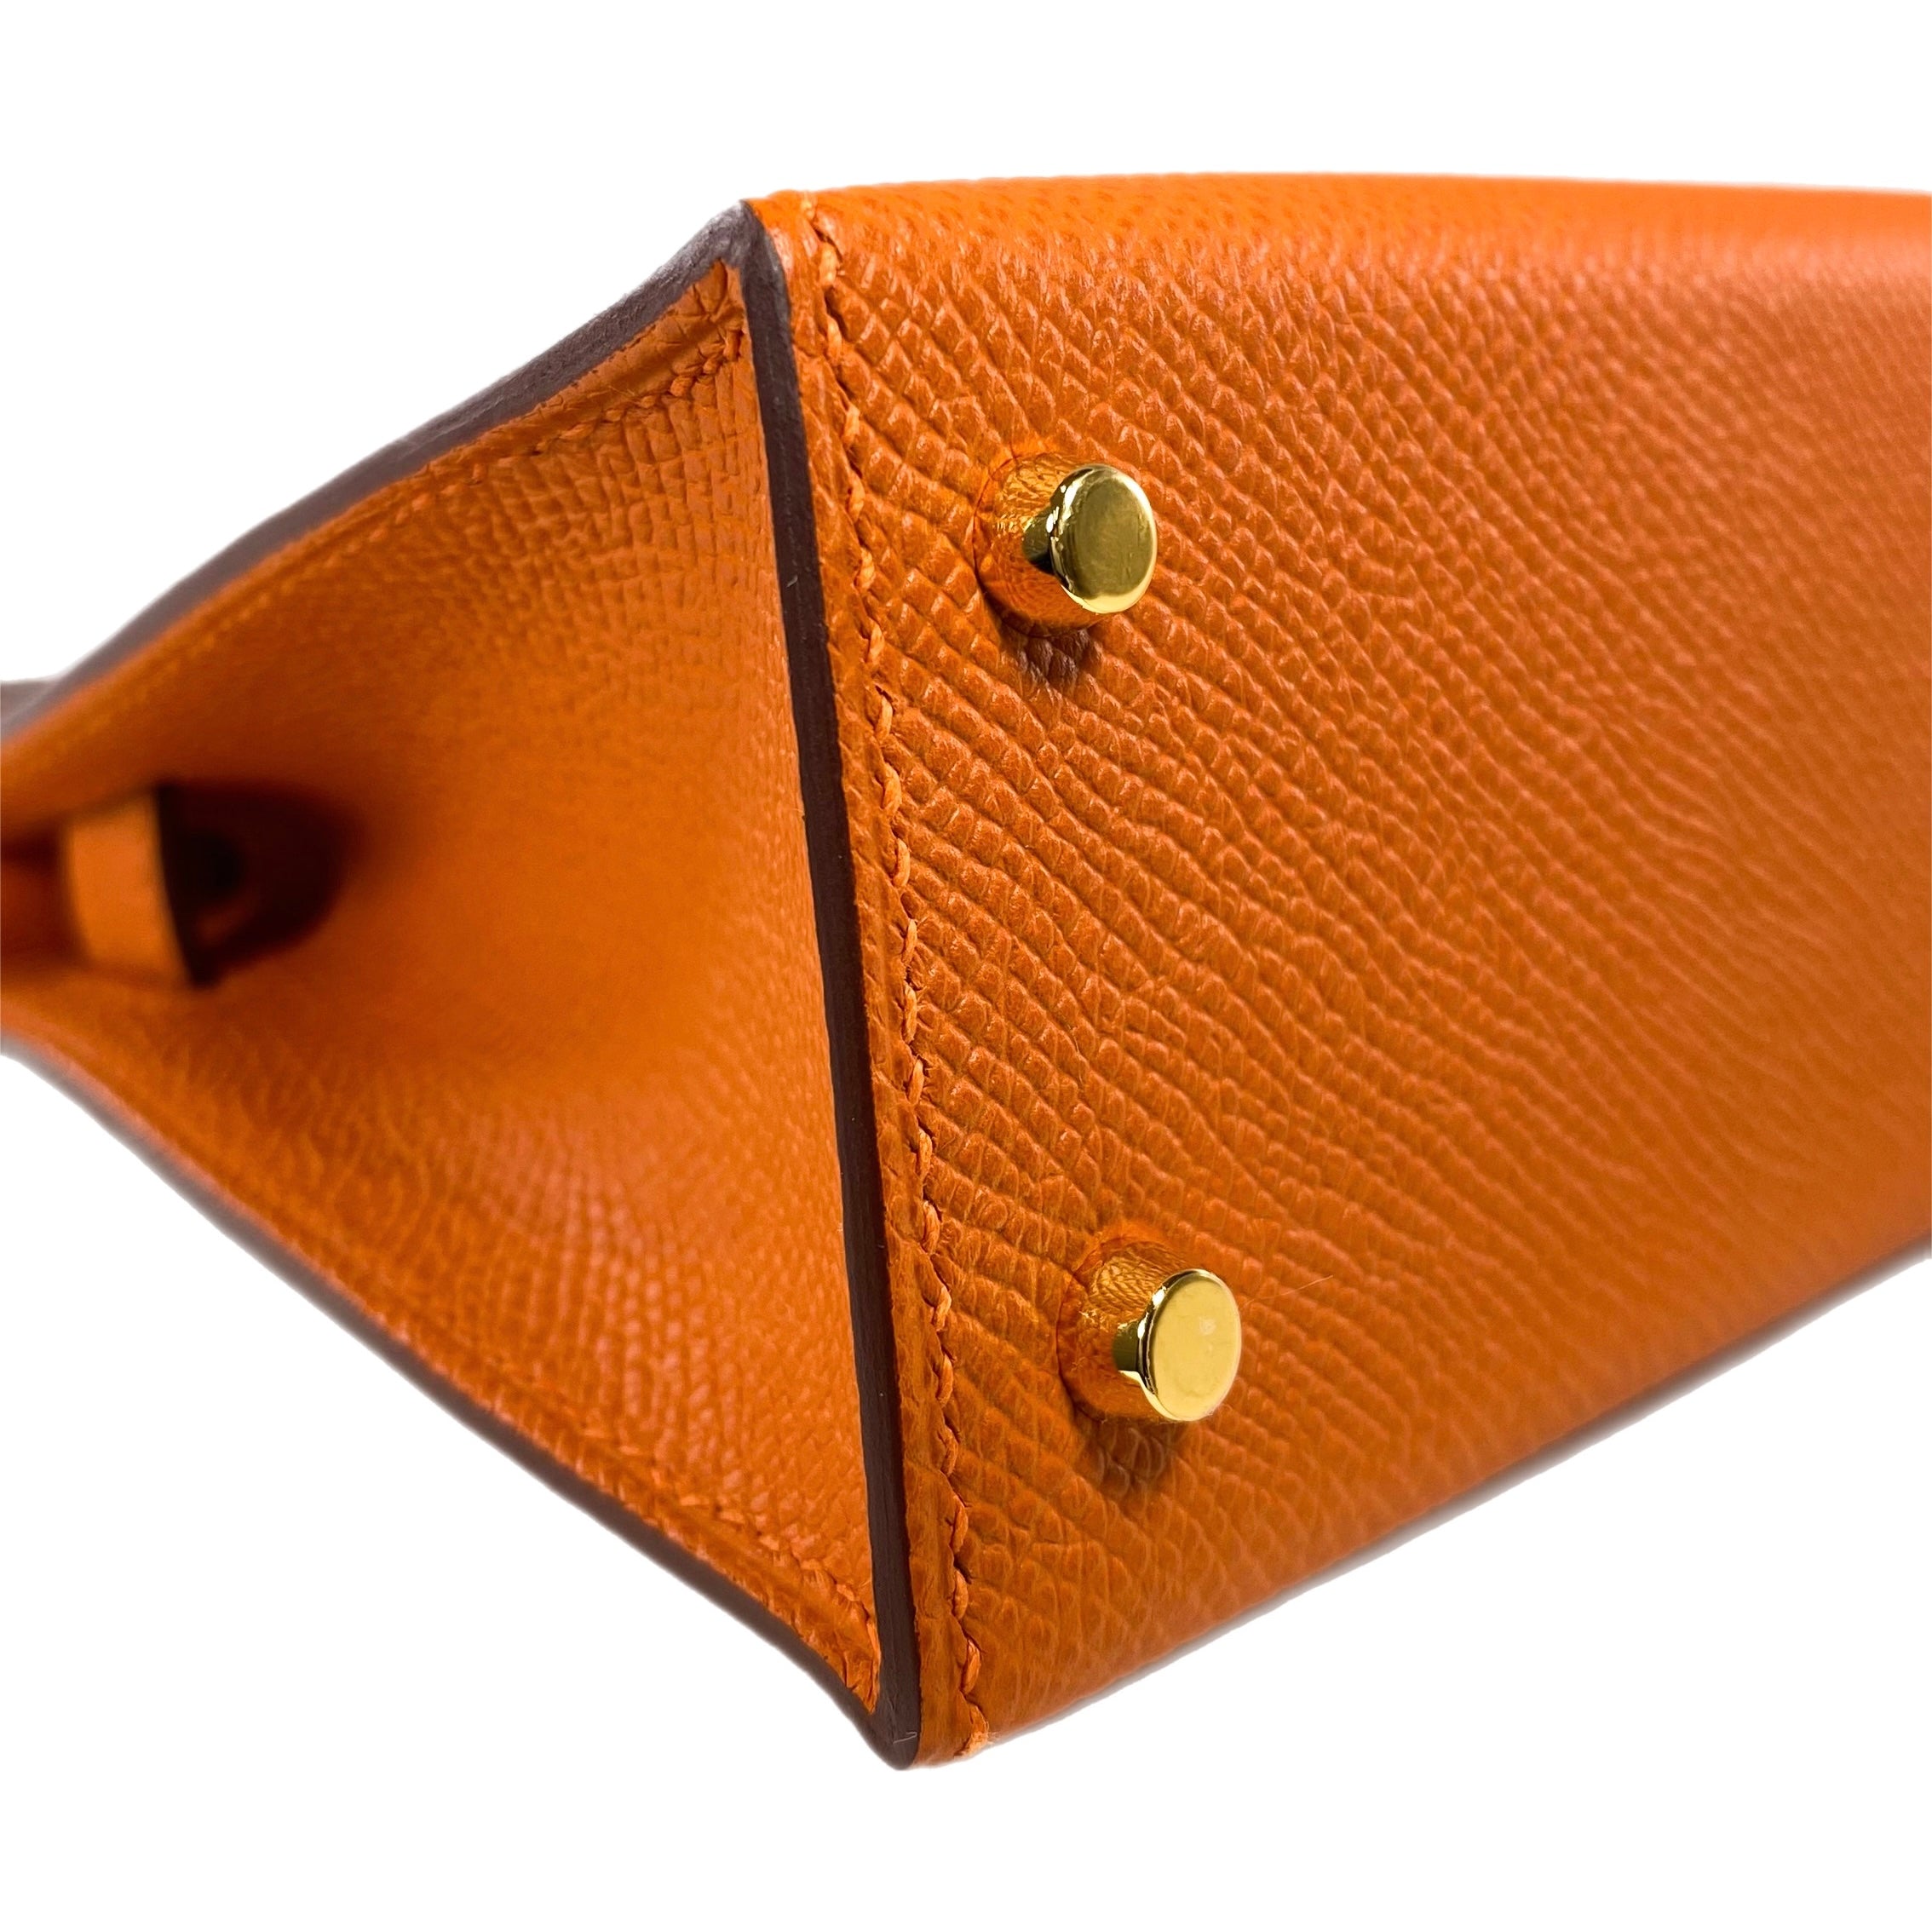 Hermès Orange Epsom Kelly Pochette with Gold hardware – Only